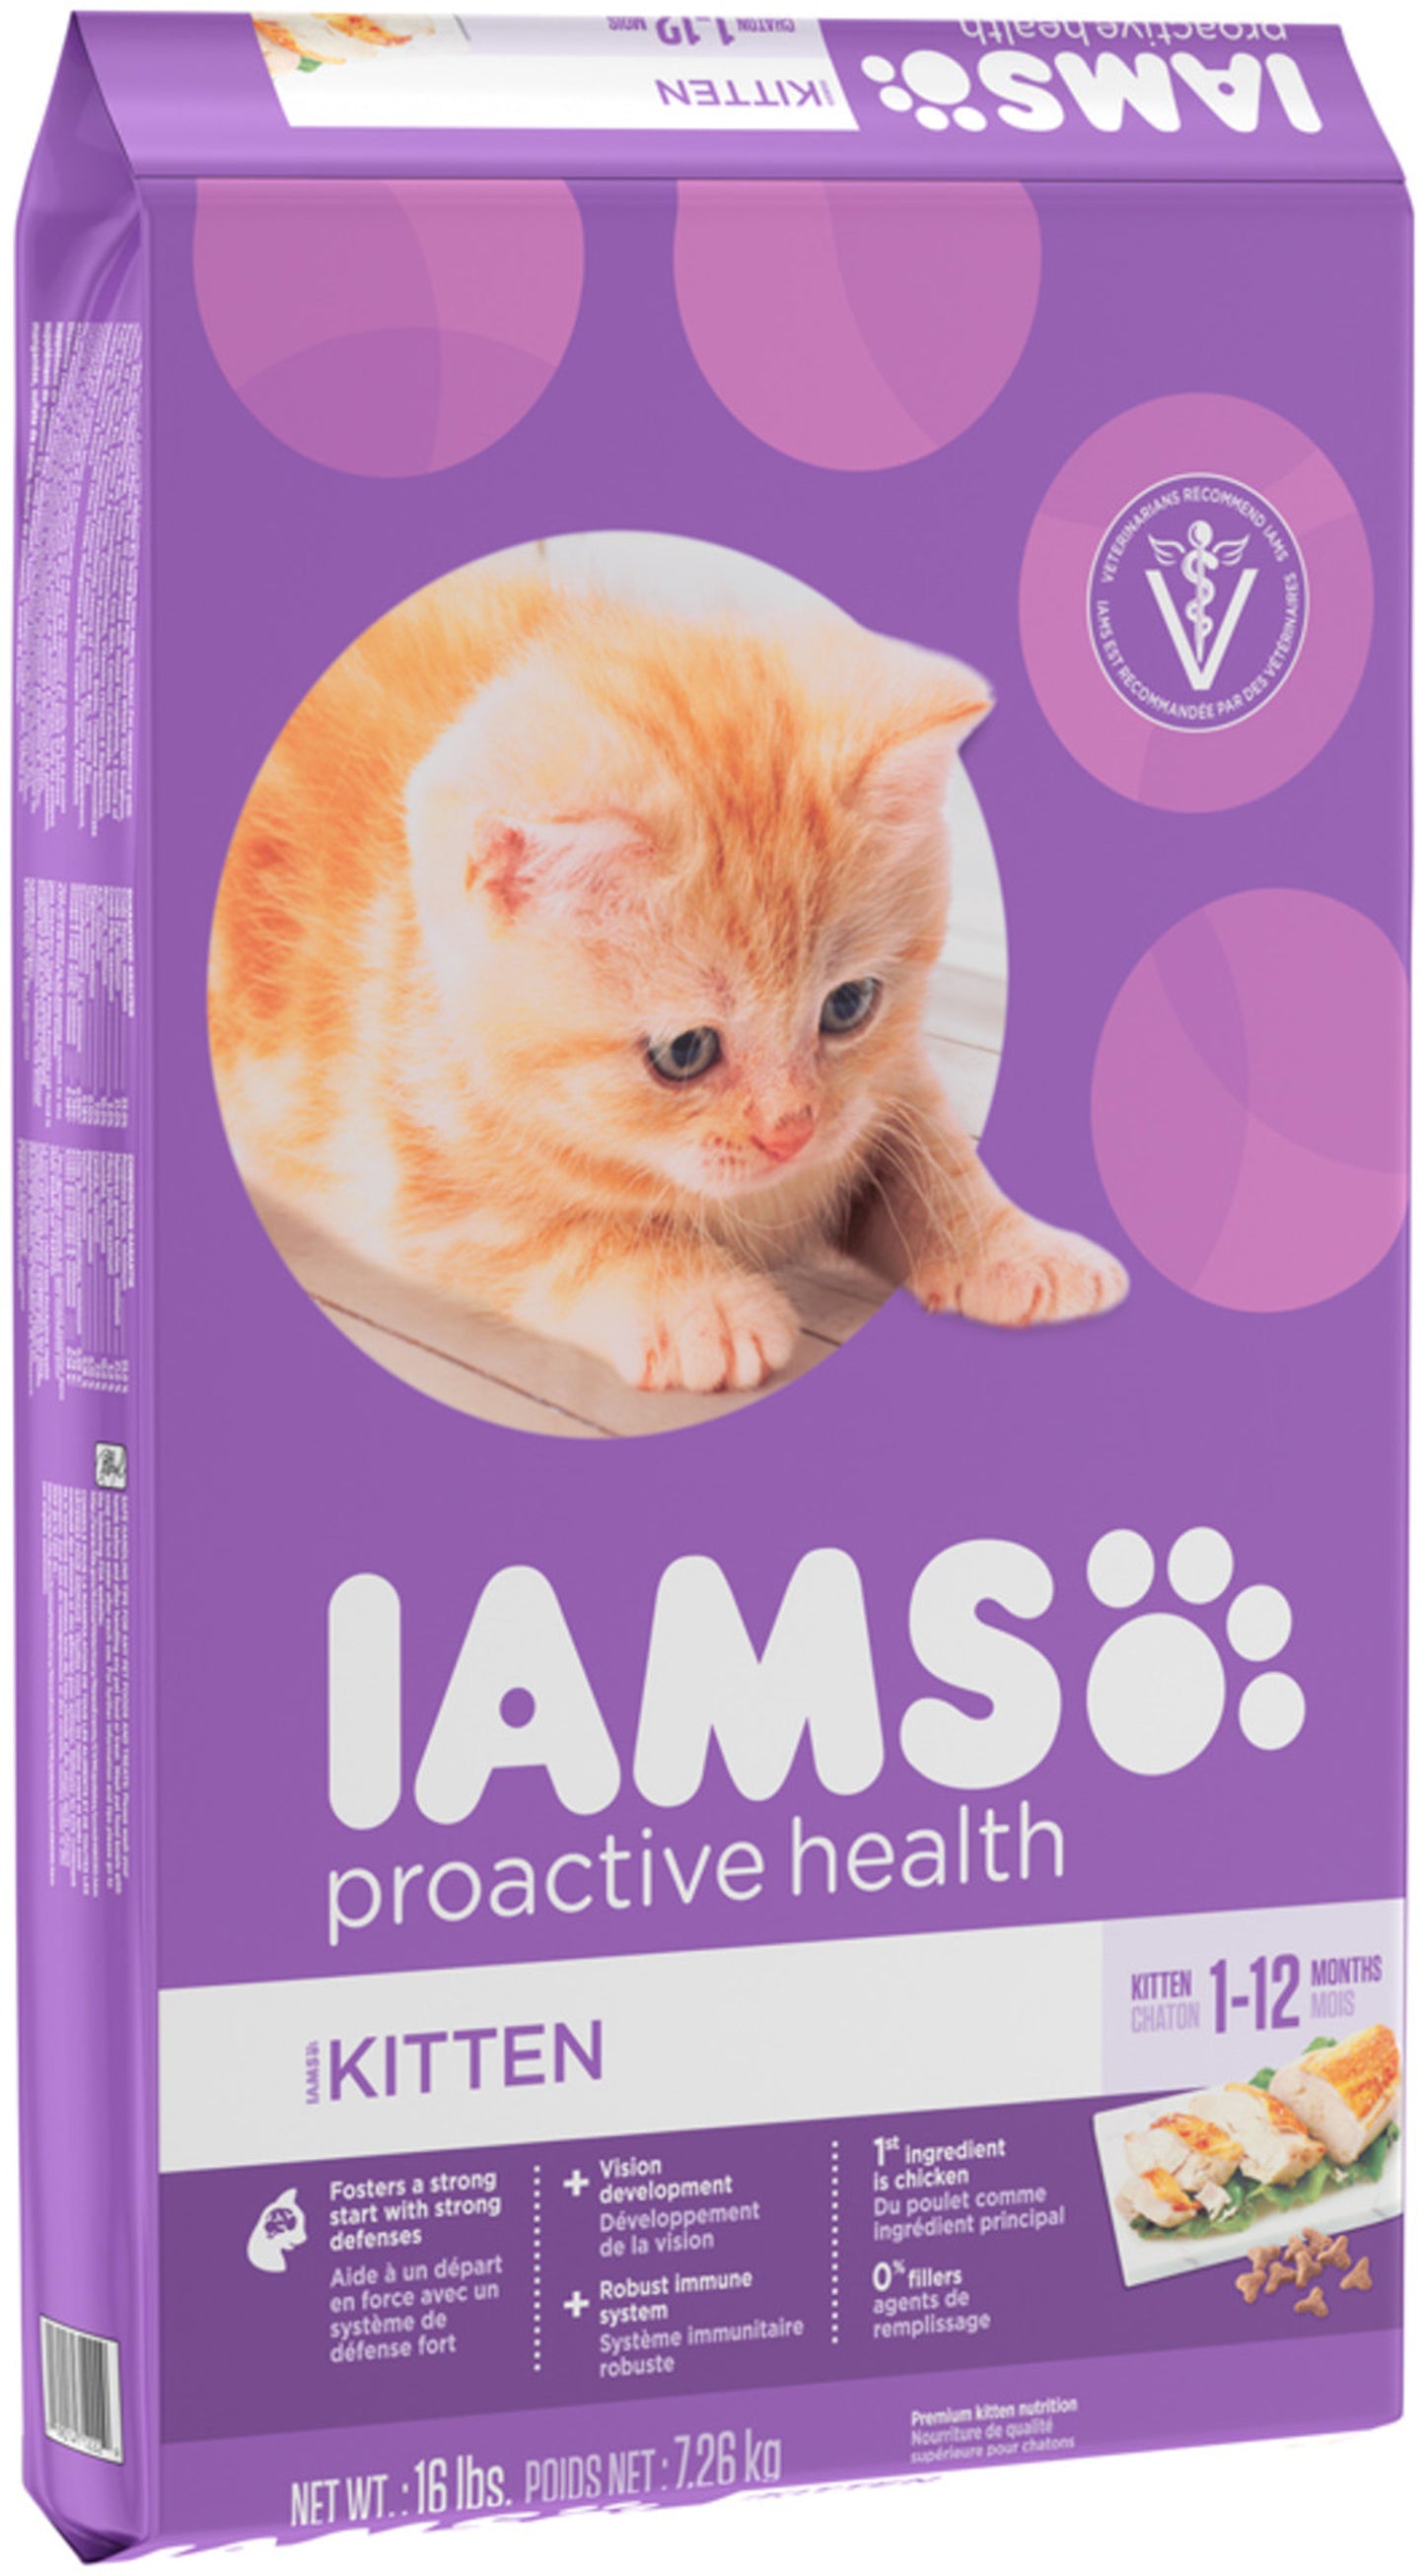 IAMS ProActive Health Playful Kitten Food 16 lb